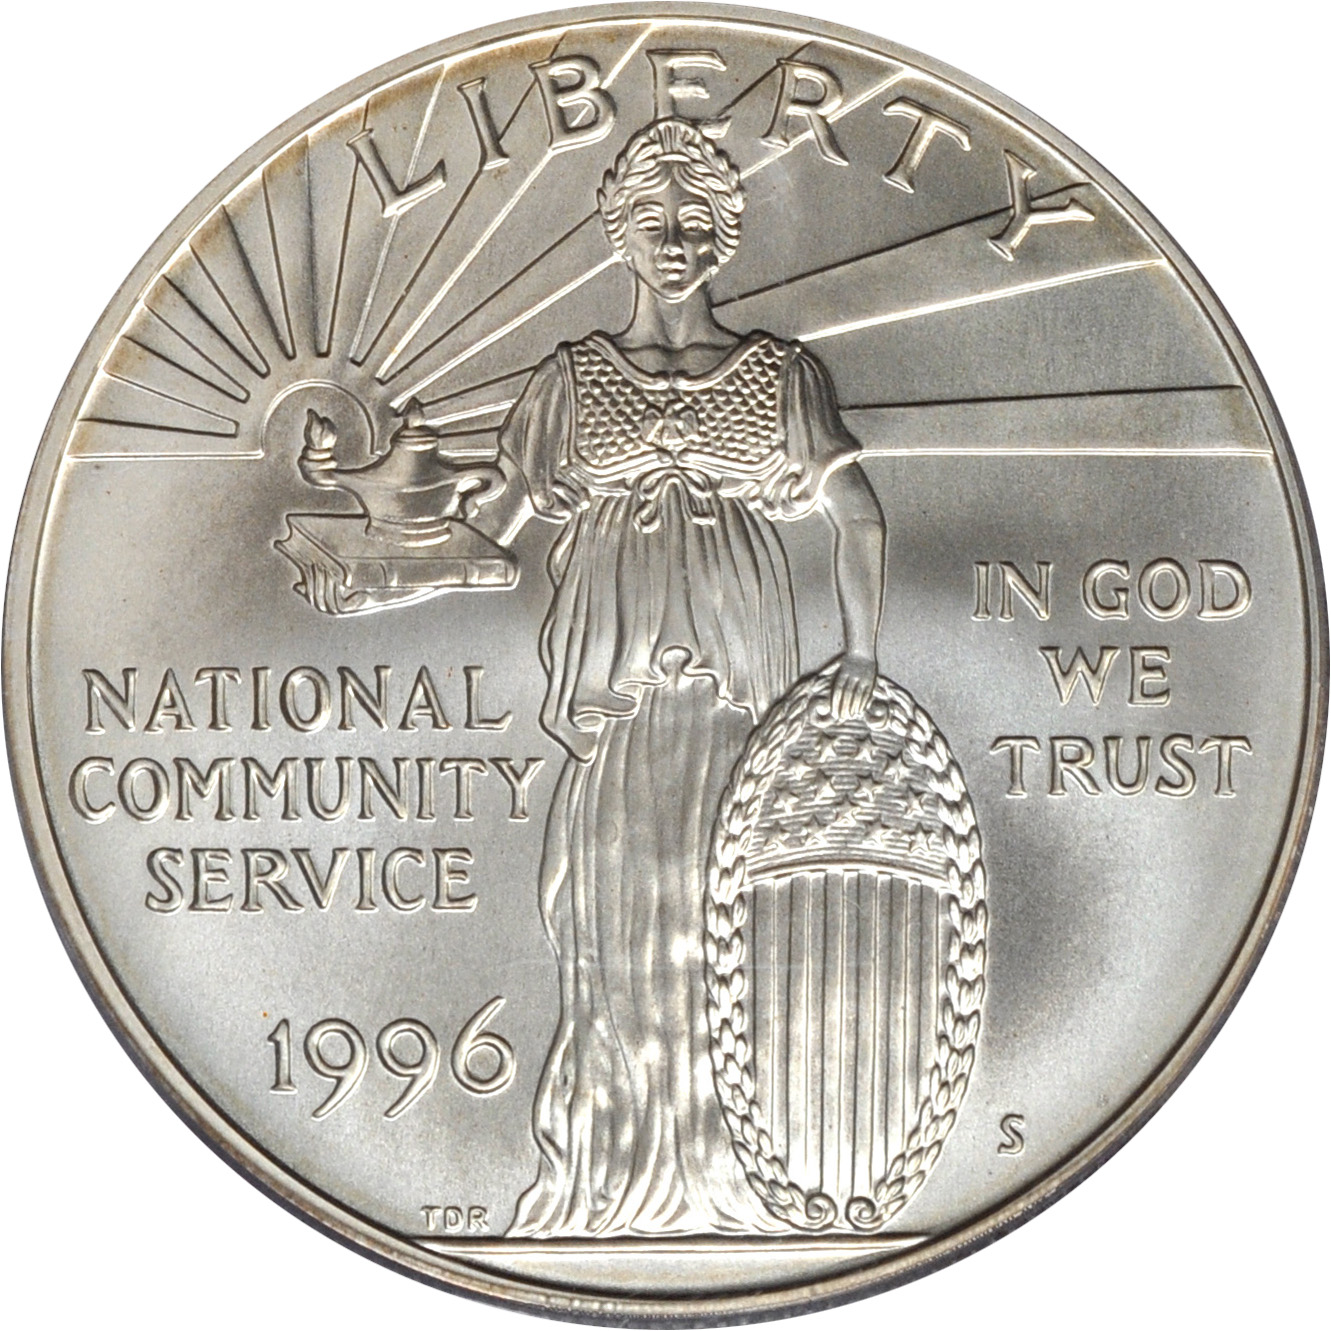 Gem Cameo US Mint 1996 S National Community Service Commemorative Proof Silver Dollar DCAM 